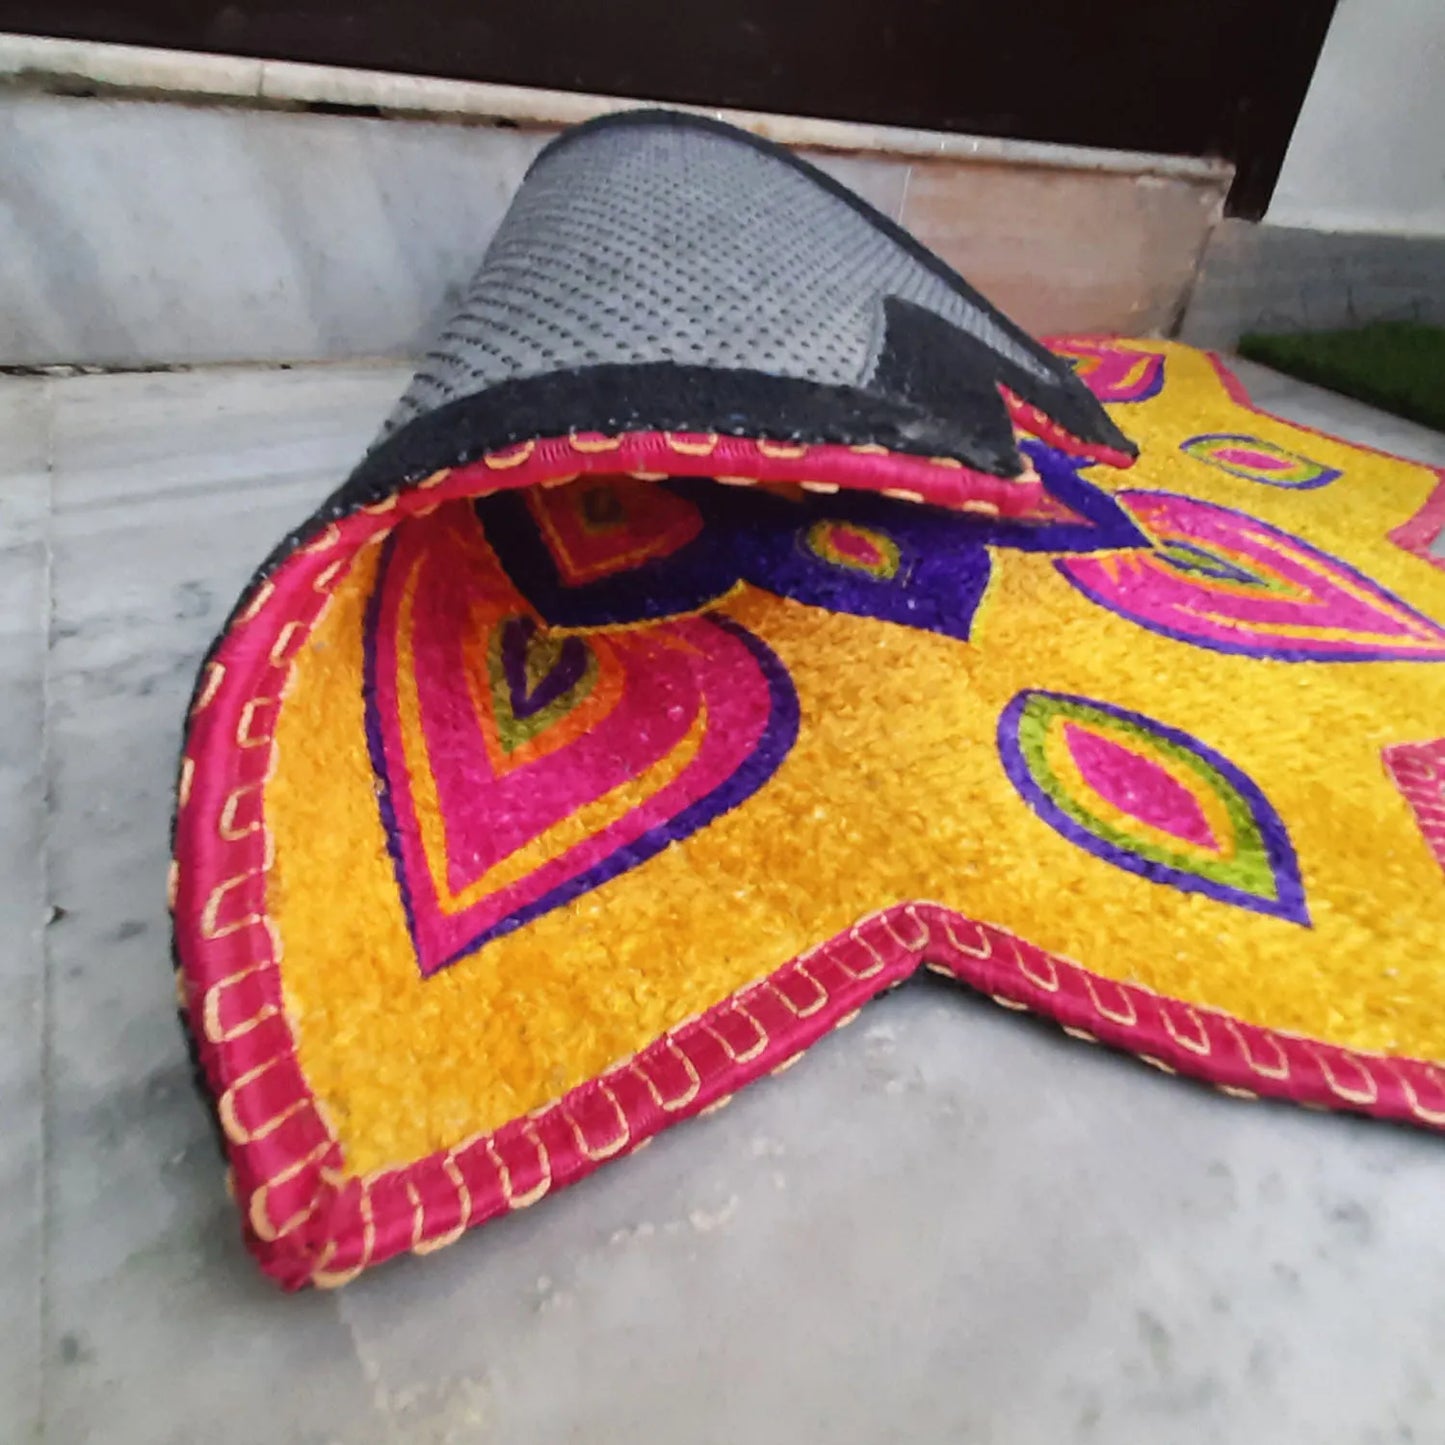 Avioni Home Floor Mats in Beautiful Rangoli Petals Design – Anti Slip, Durable & Washable | Outdoor & Indoor